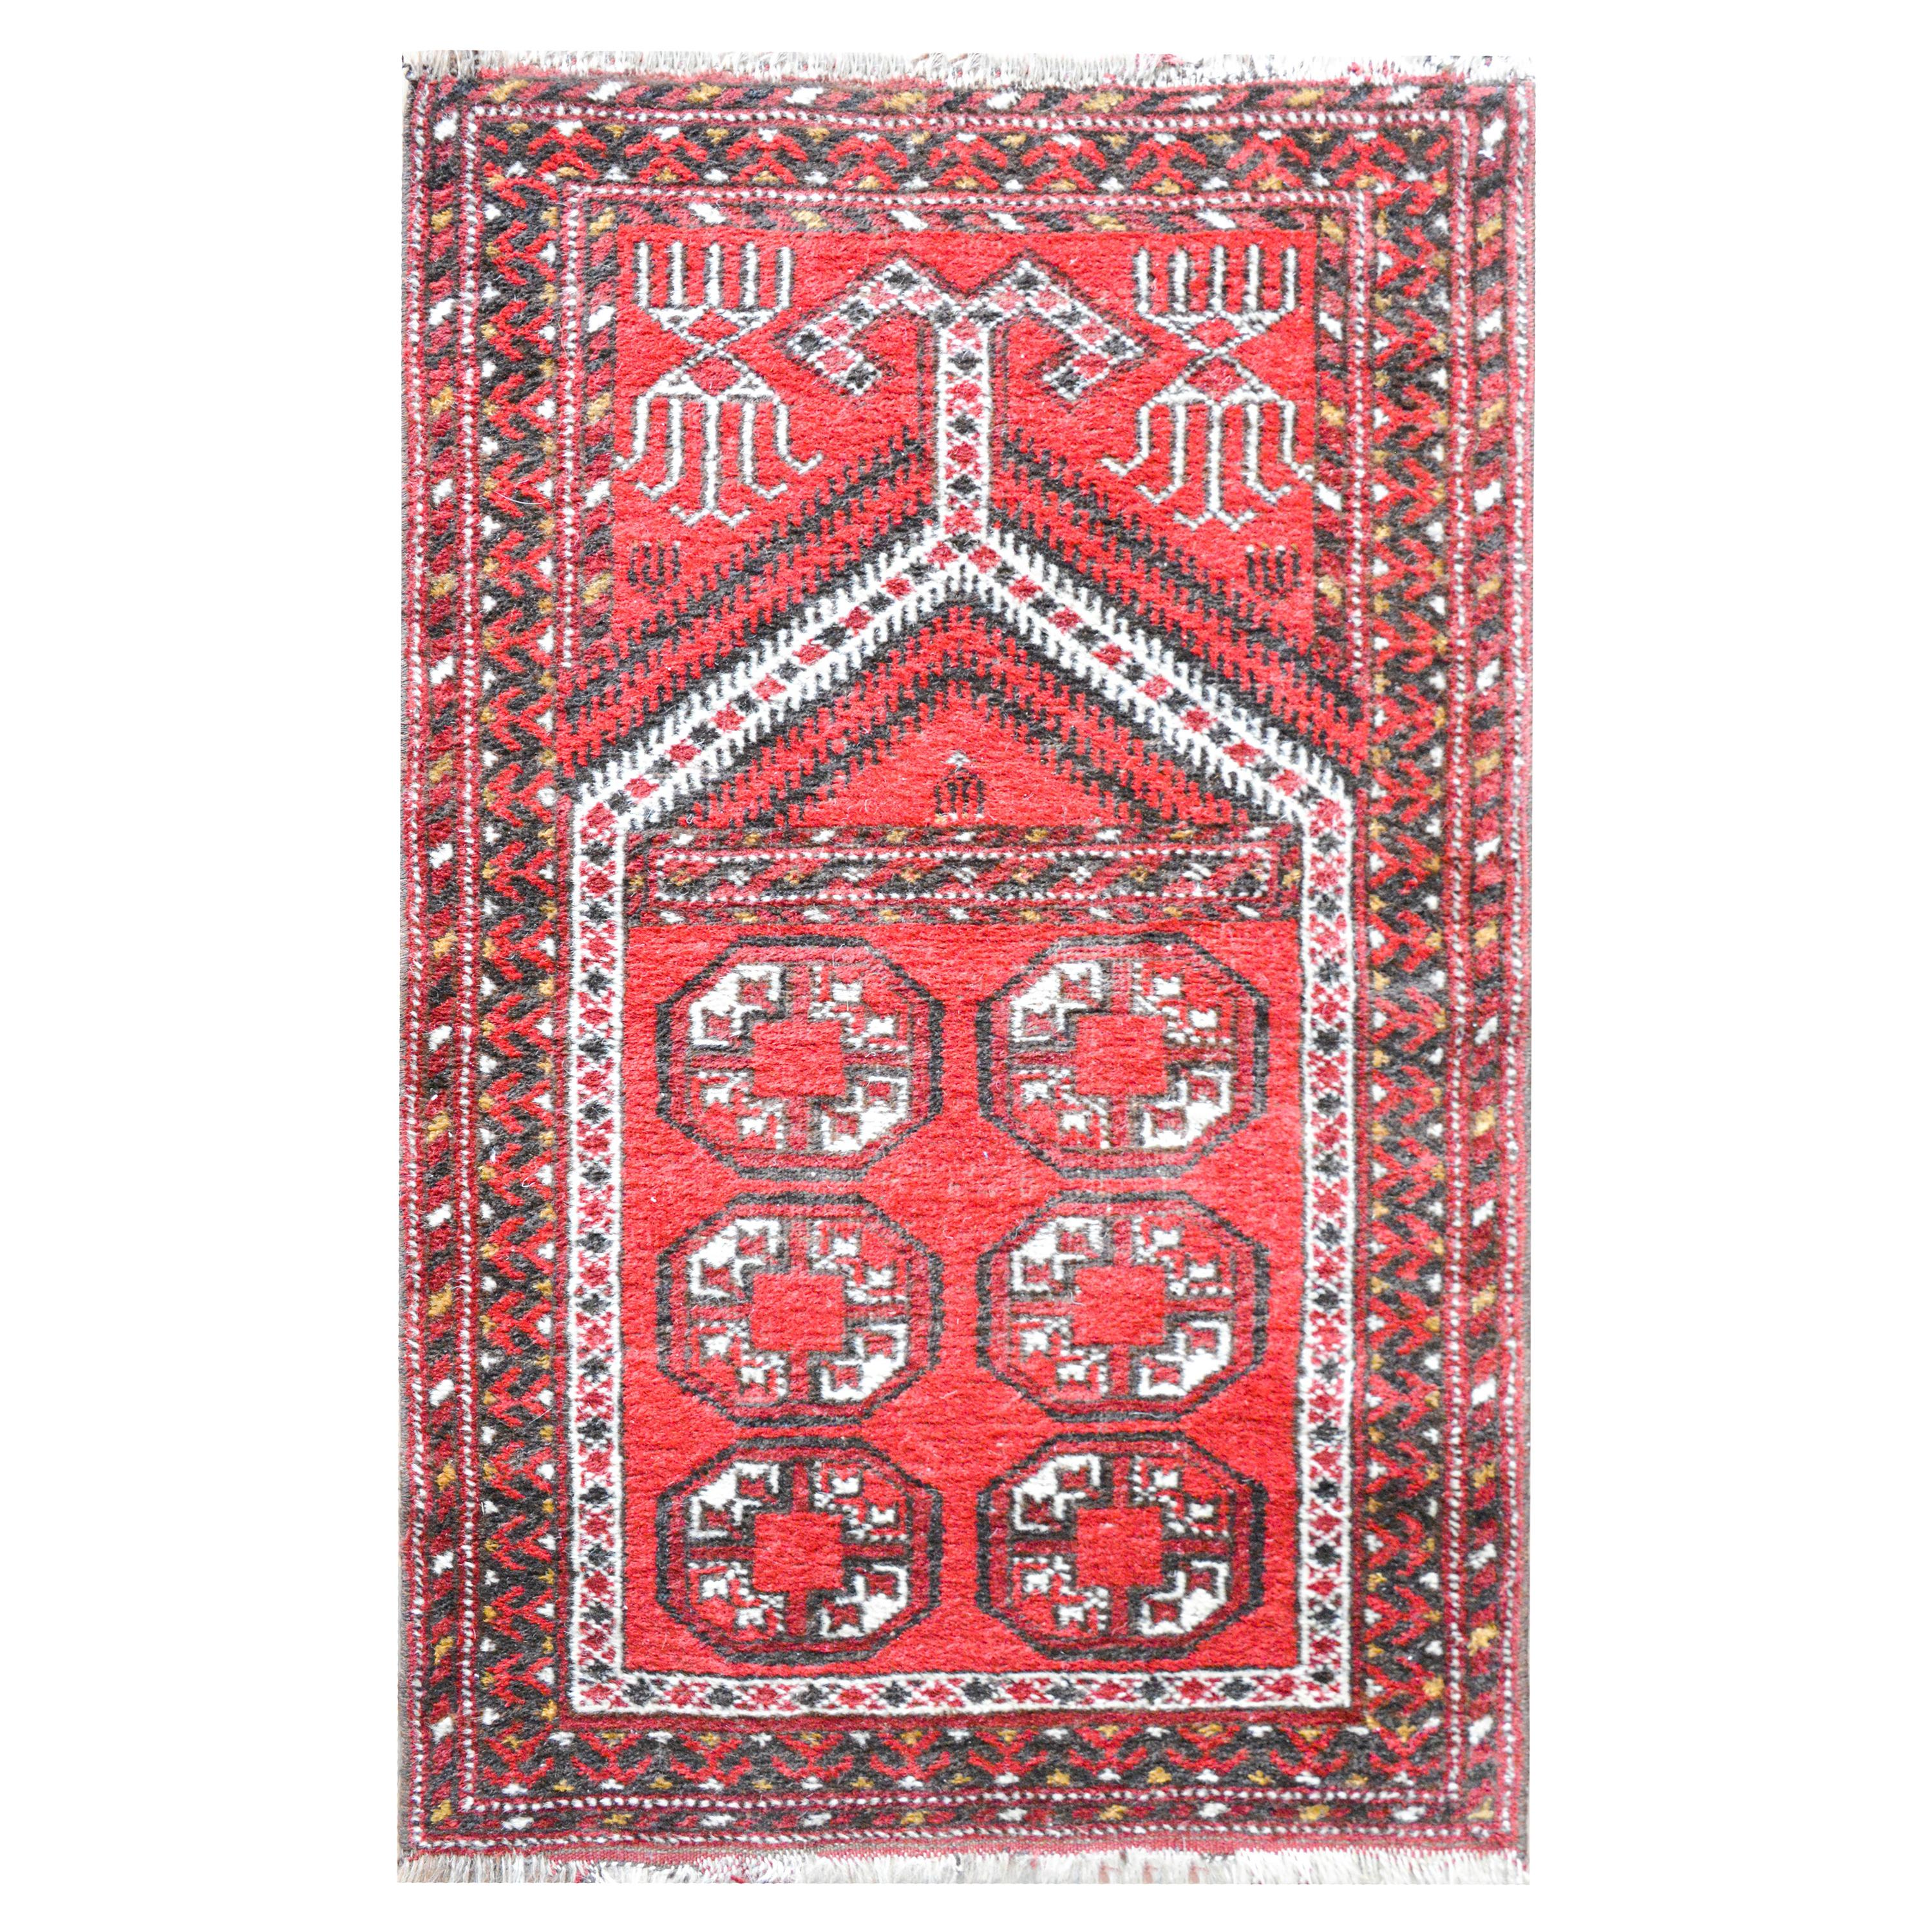 Vintage Afghani Prayer Rug